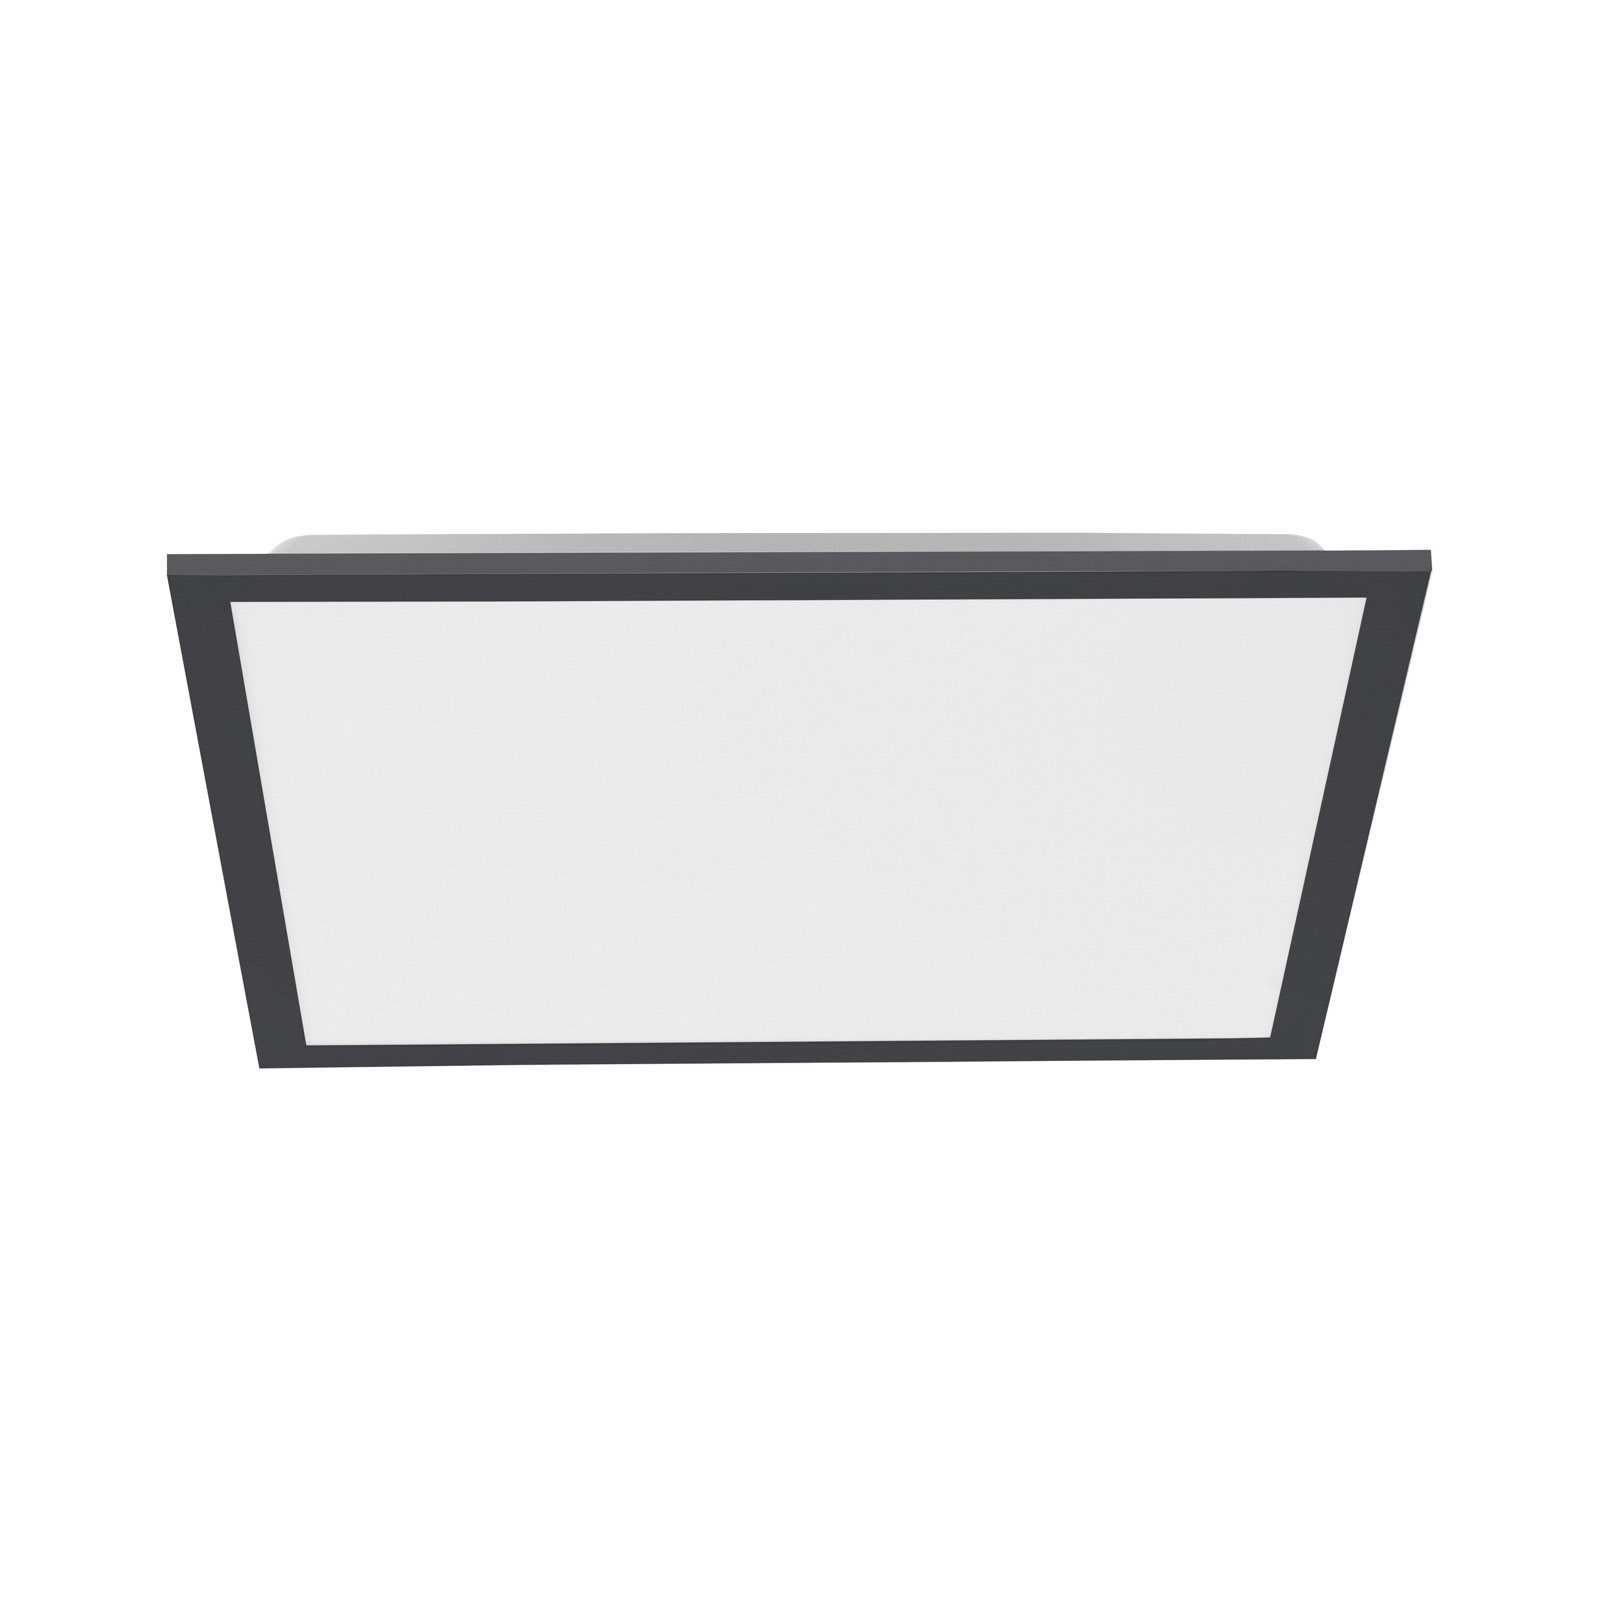 Lampa sufitowa LED Flat, CCT, czarna, 45 x 45 cm